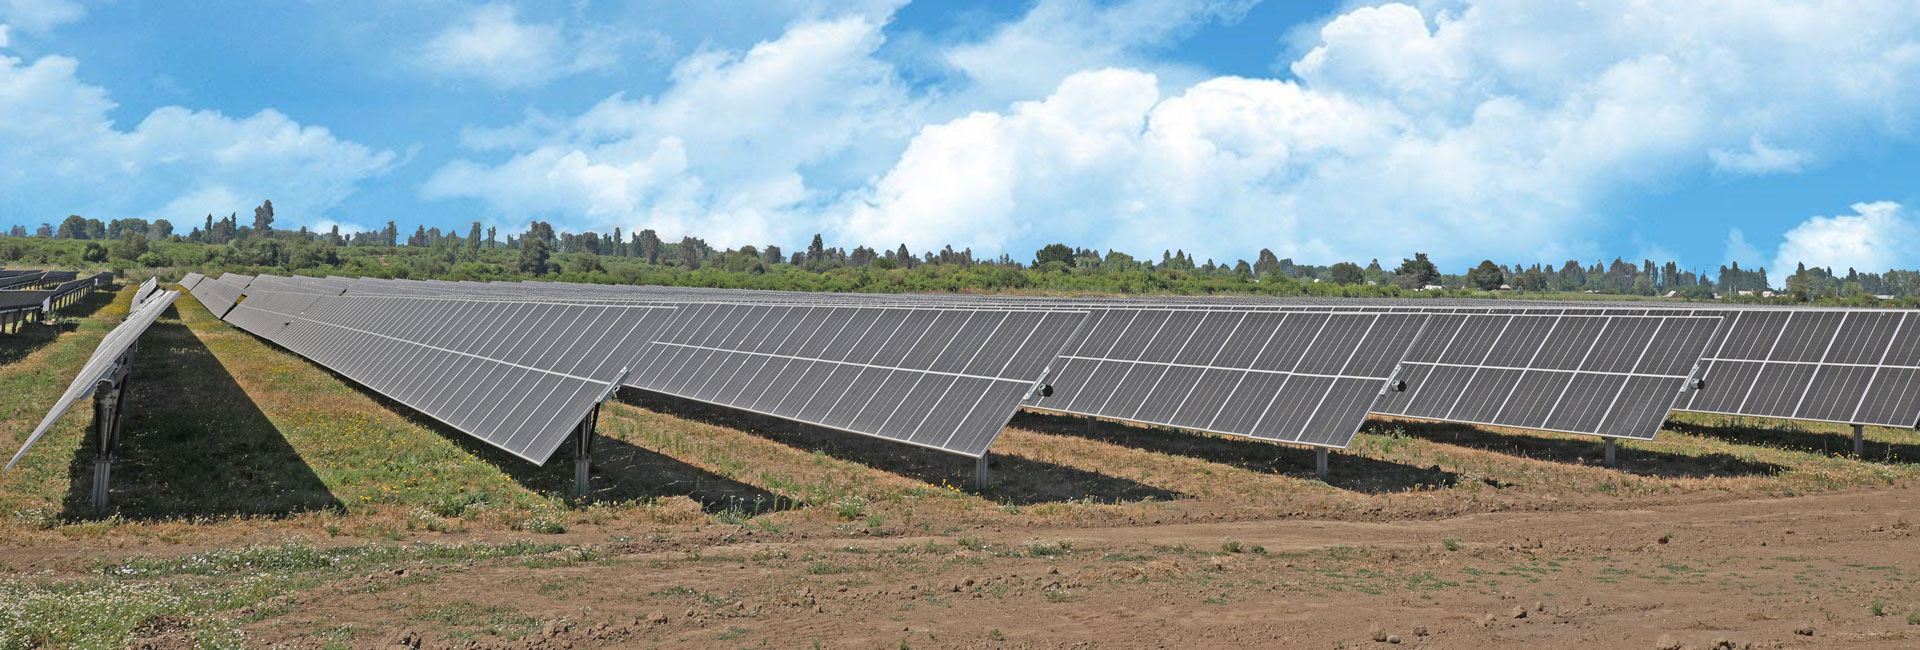 Machicura Photovoltaic Farm